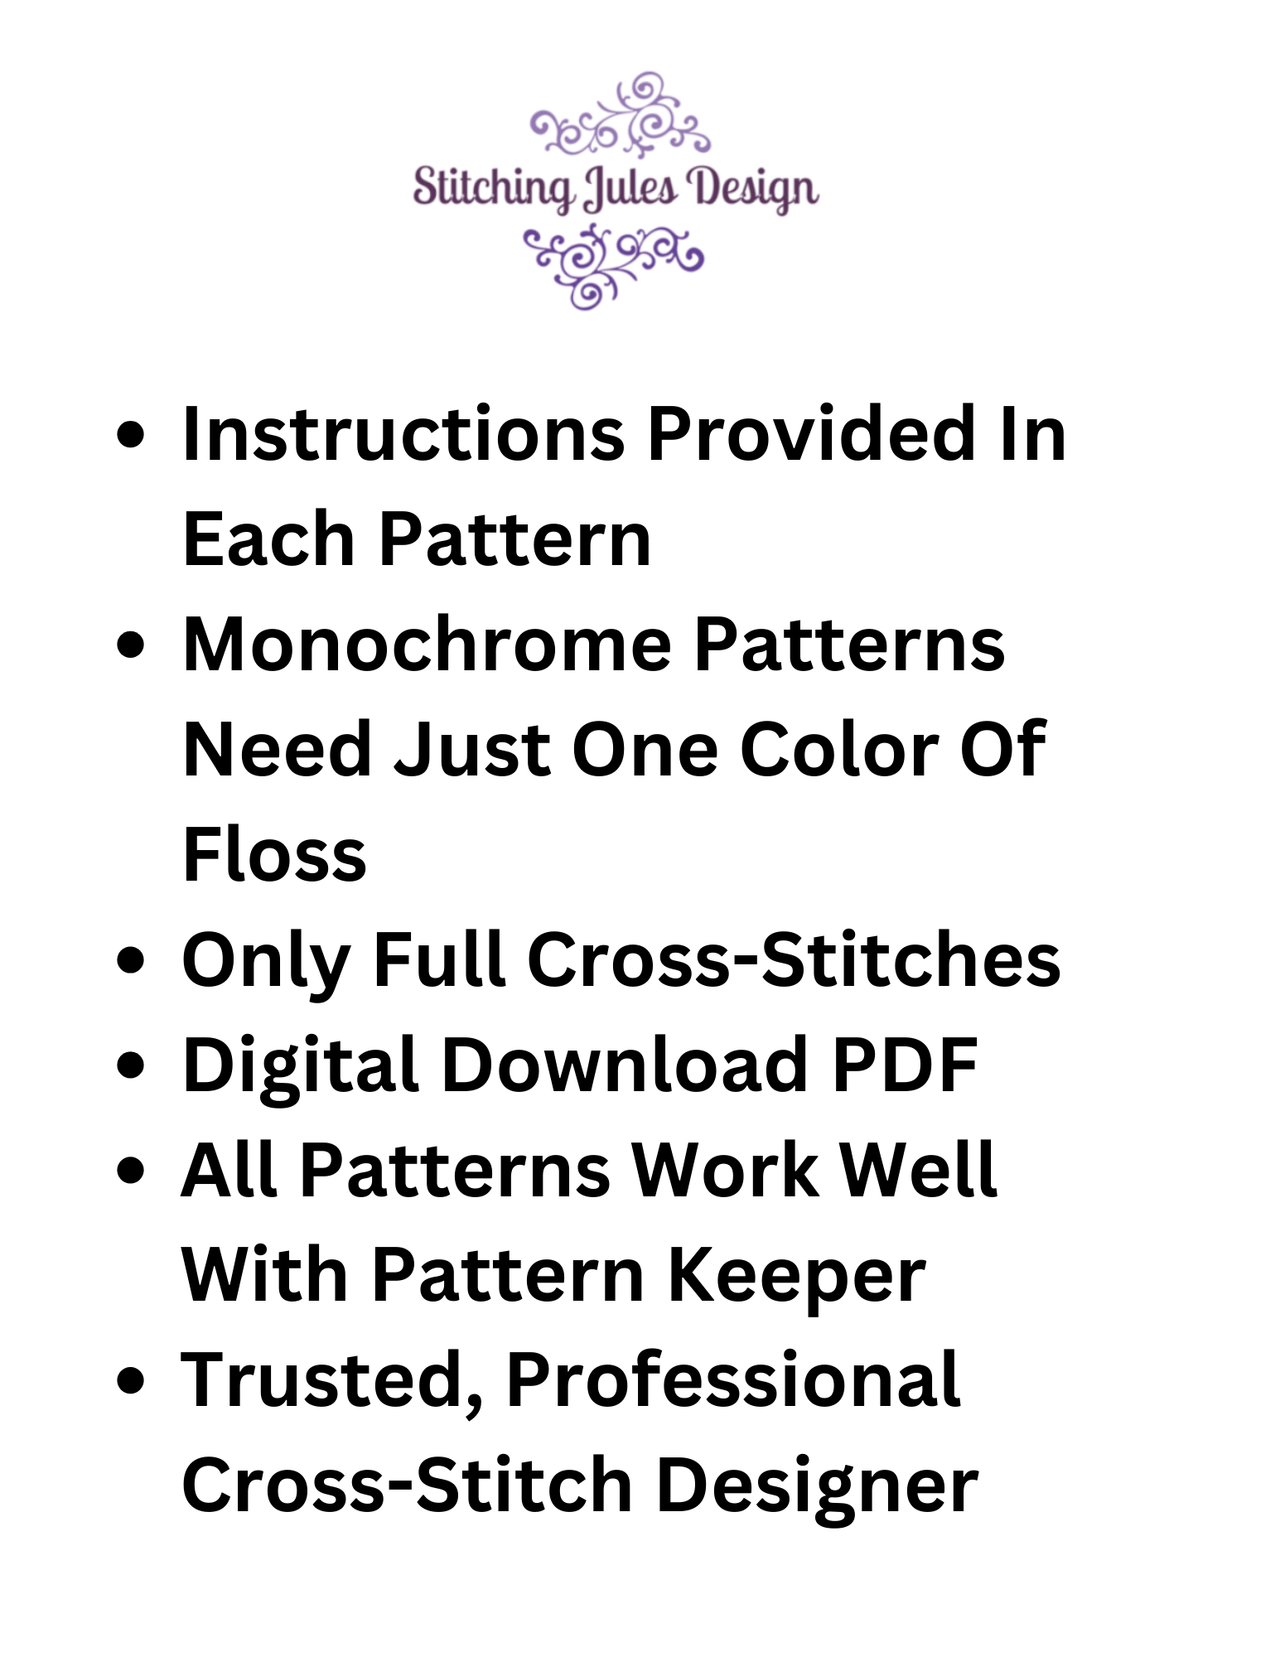 Stitching Jules Design Cross Stitch Pattern Fox Monochrome Counted Cross Stitch Pattern | Instant PDF Download